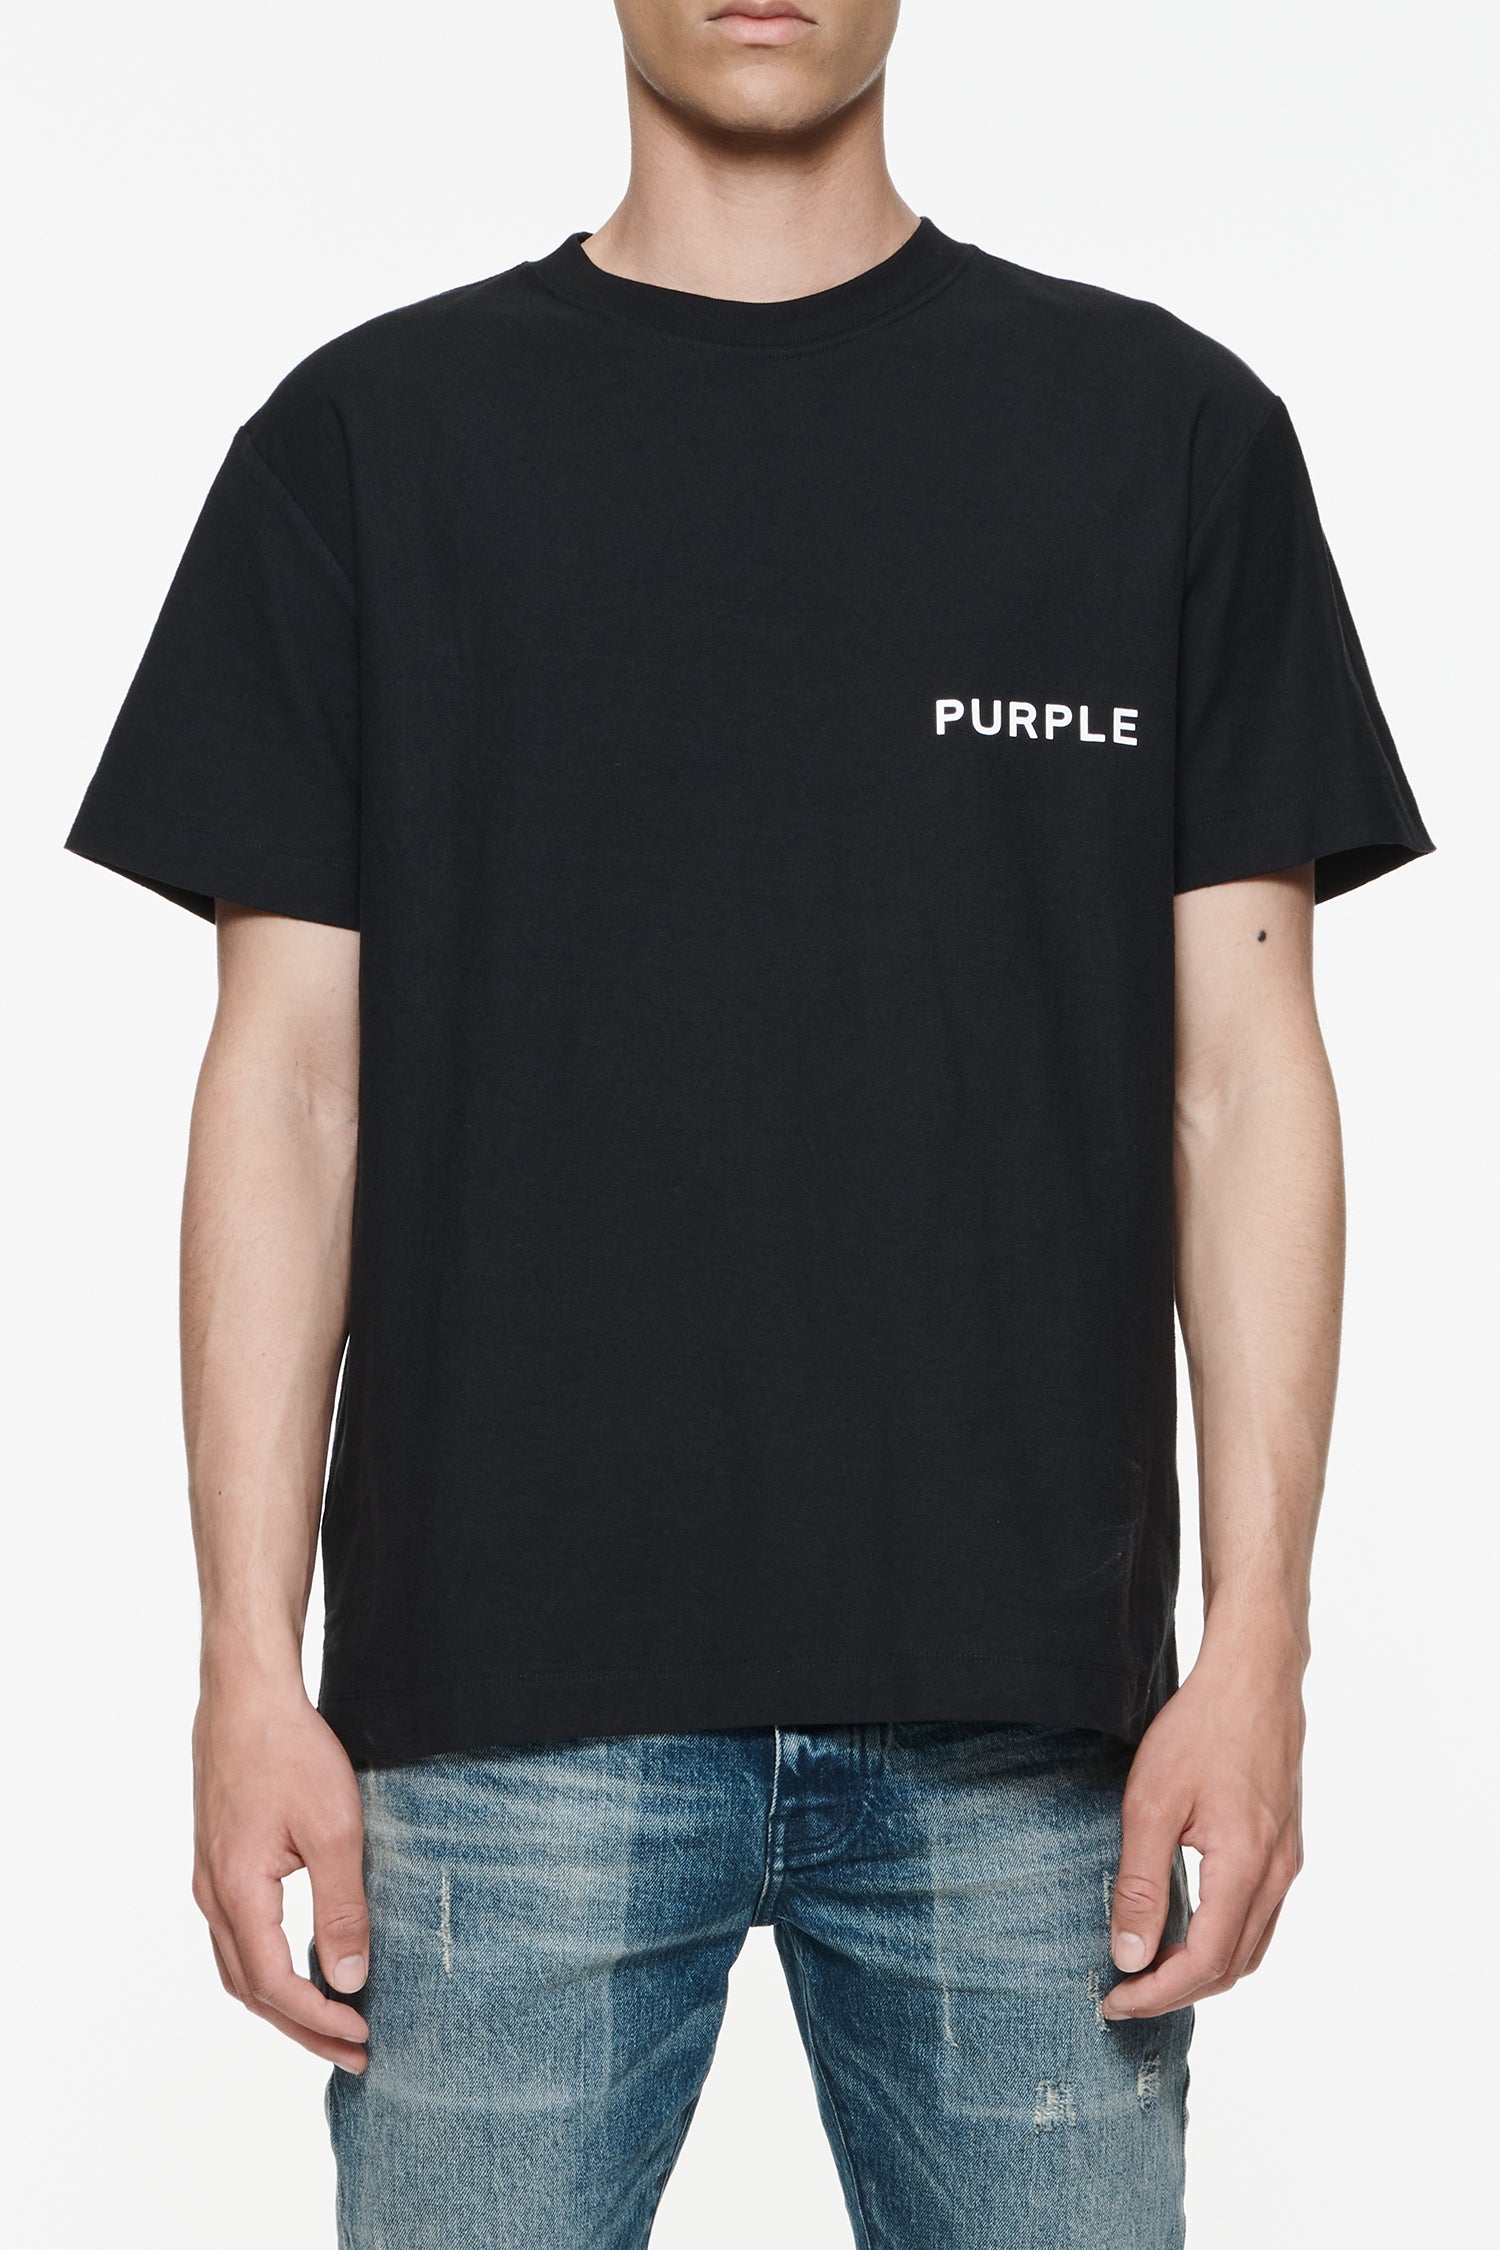 Purple Denim Tee Shirt - Textured Jersey Tee - Black